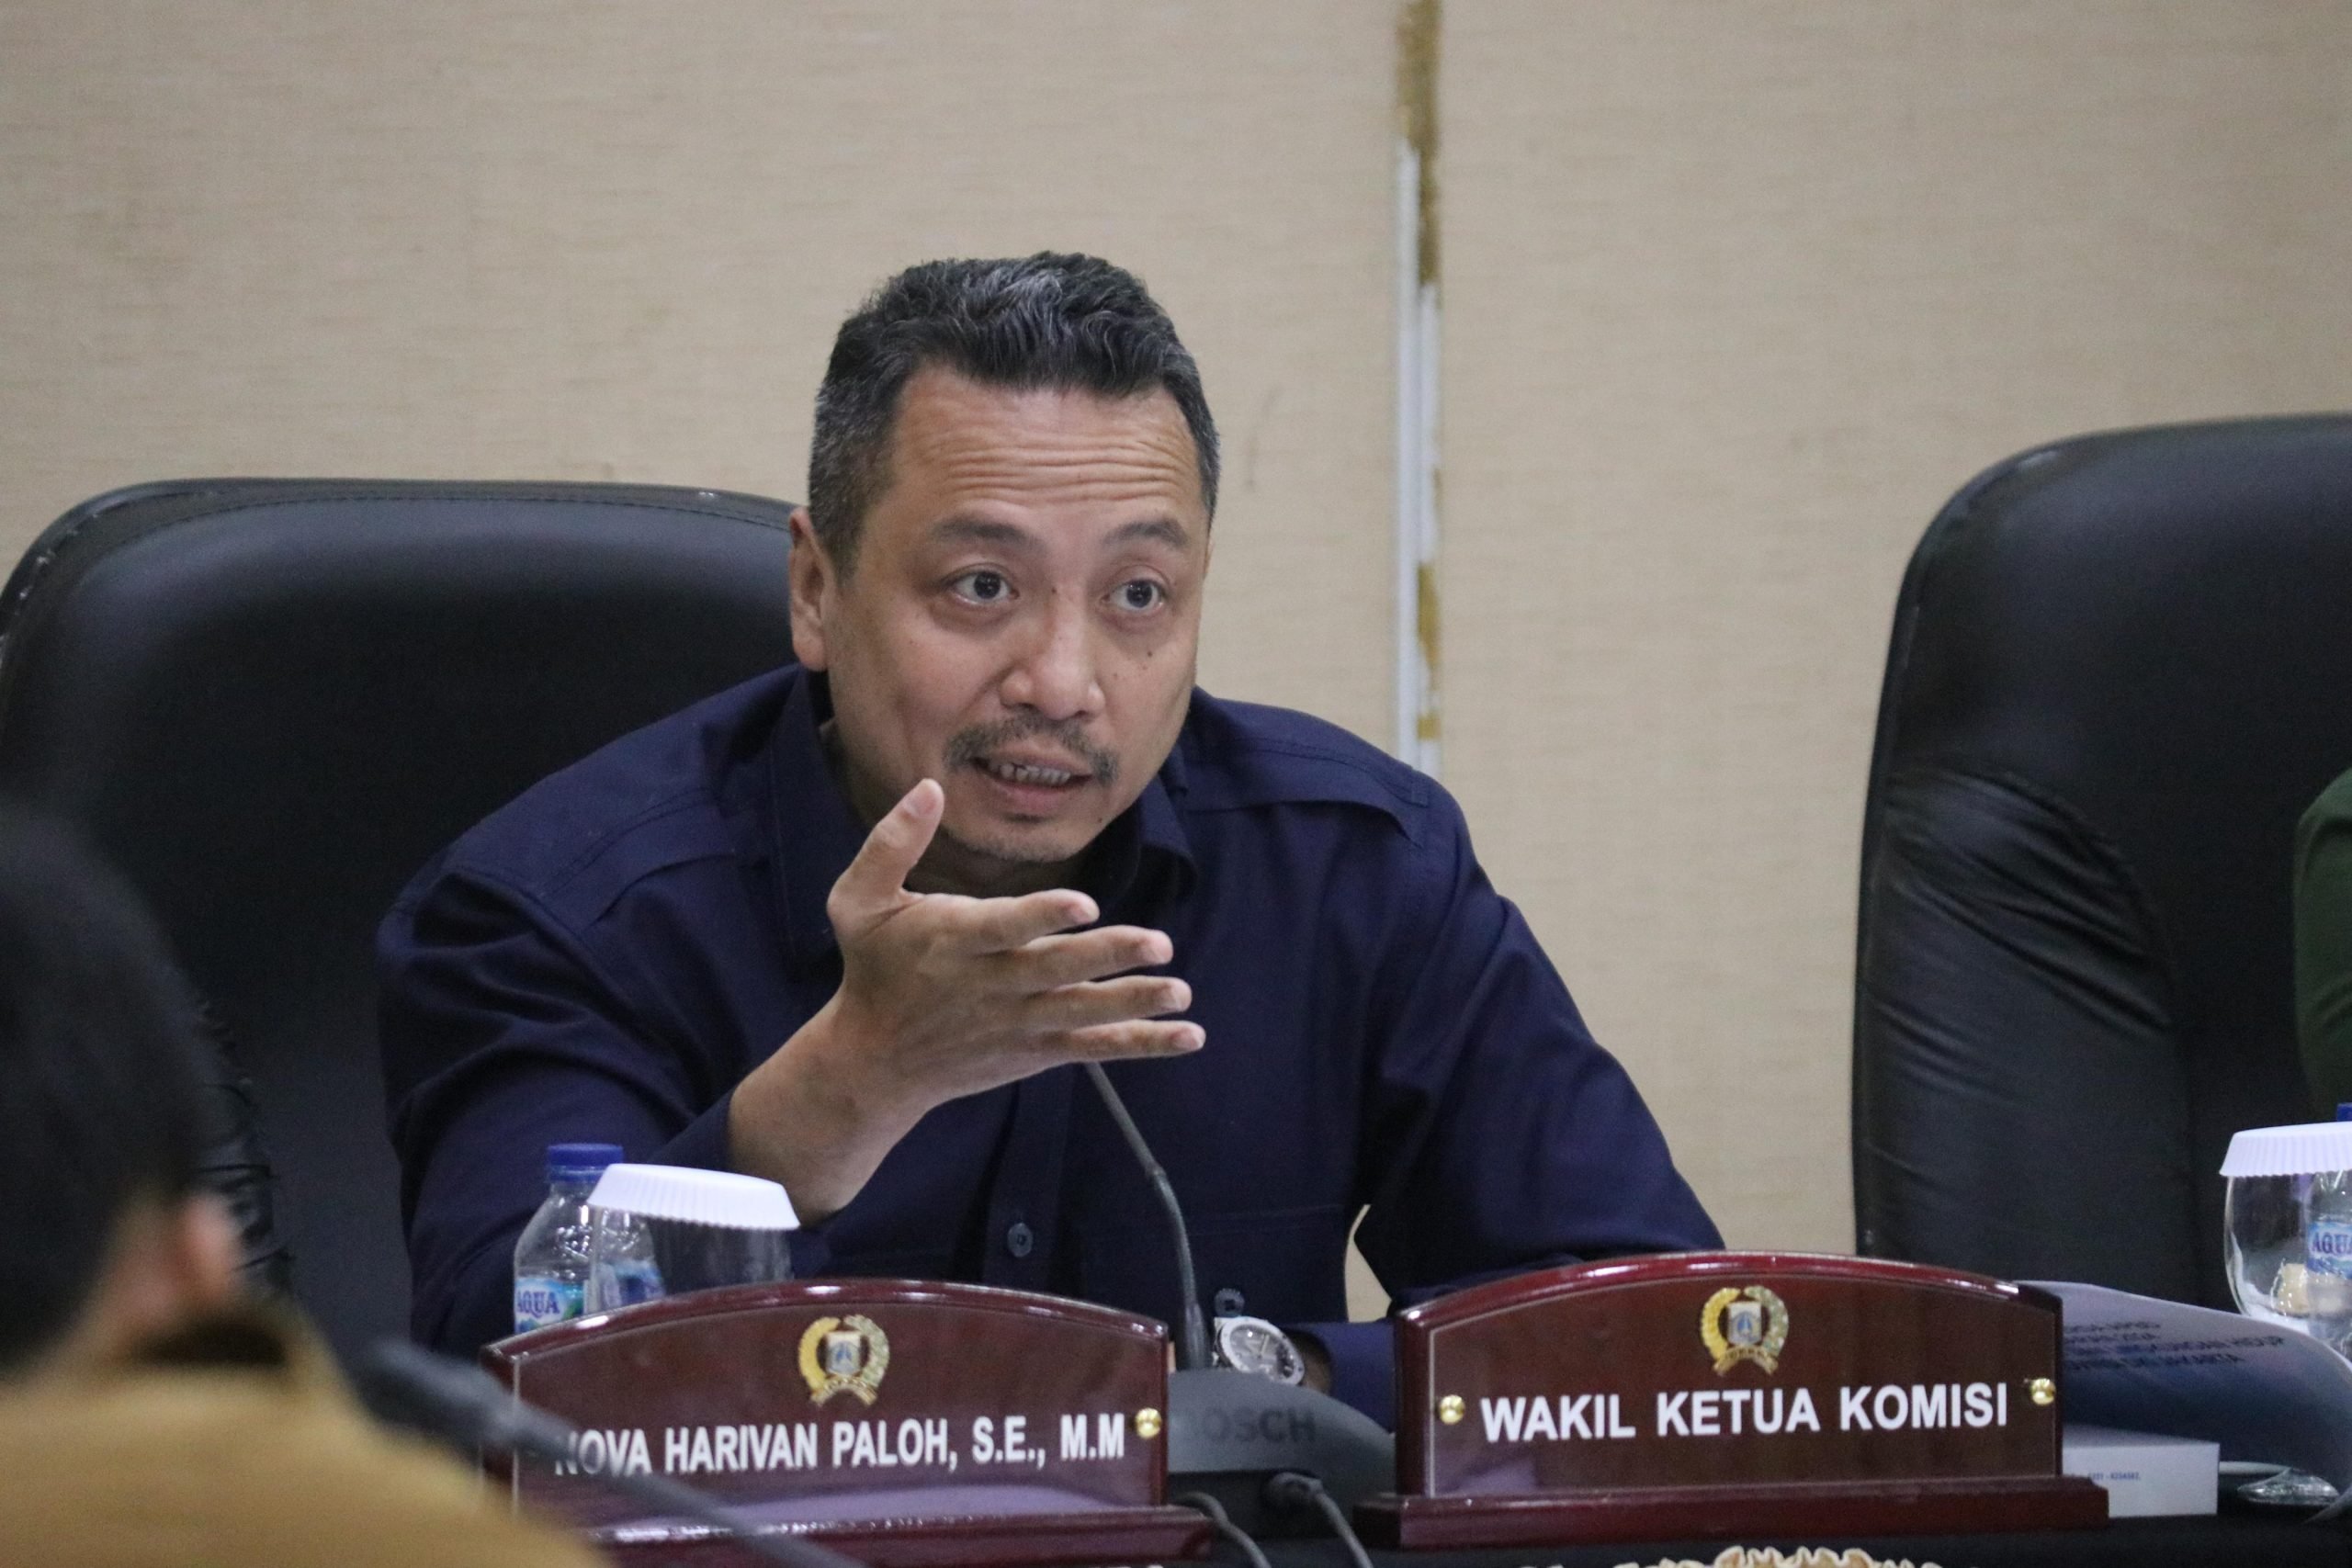 Wakil Ketua Komisi D DPRD DKI Jakarta, Nova Harivan Paloh. (SinPo.id/Dok. NasDem)